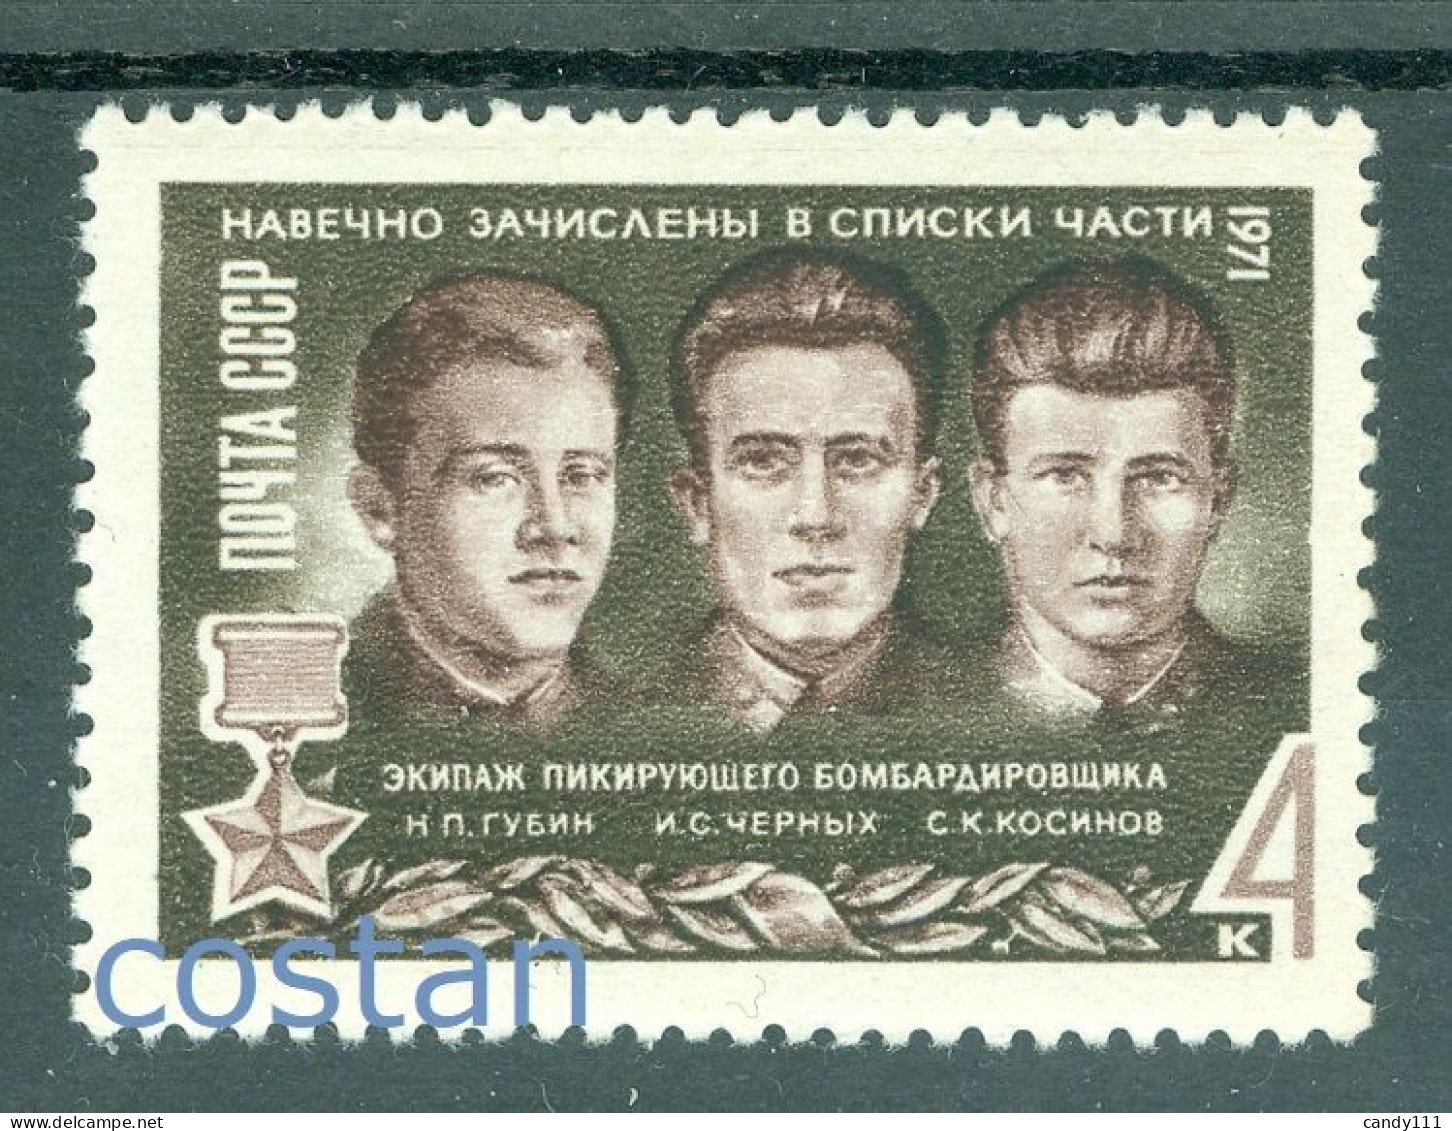 1971 War Medal,War Heroes Of Soviet Union,Pilot N.Gubin,Kosinov,Russia,3849,MNH - Militaria